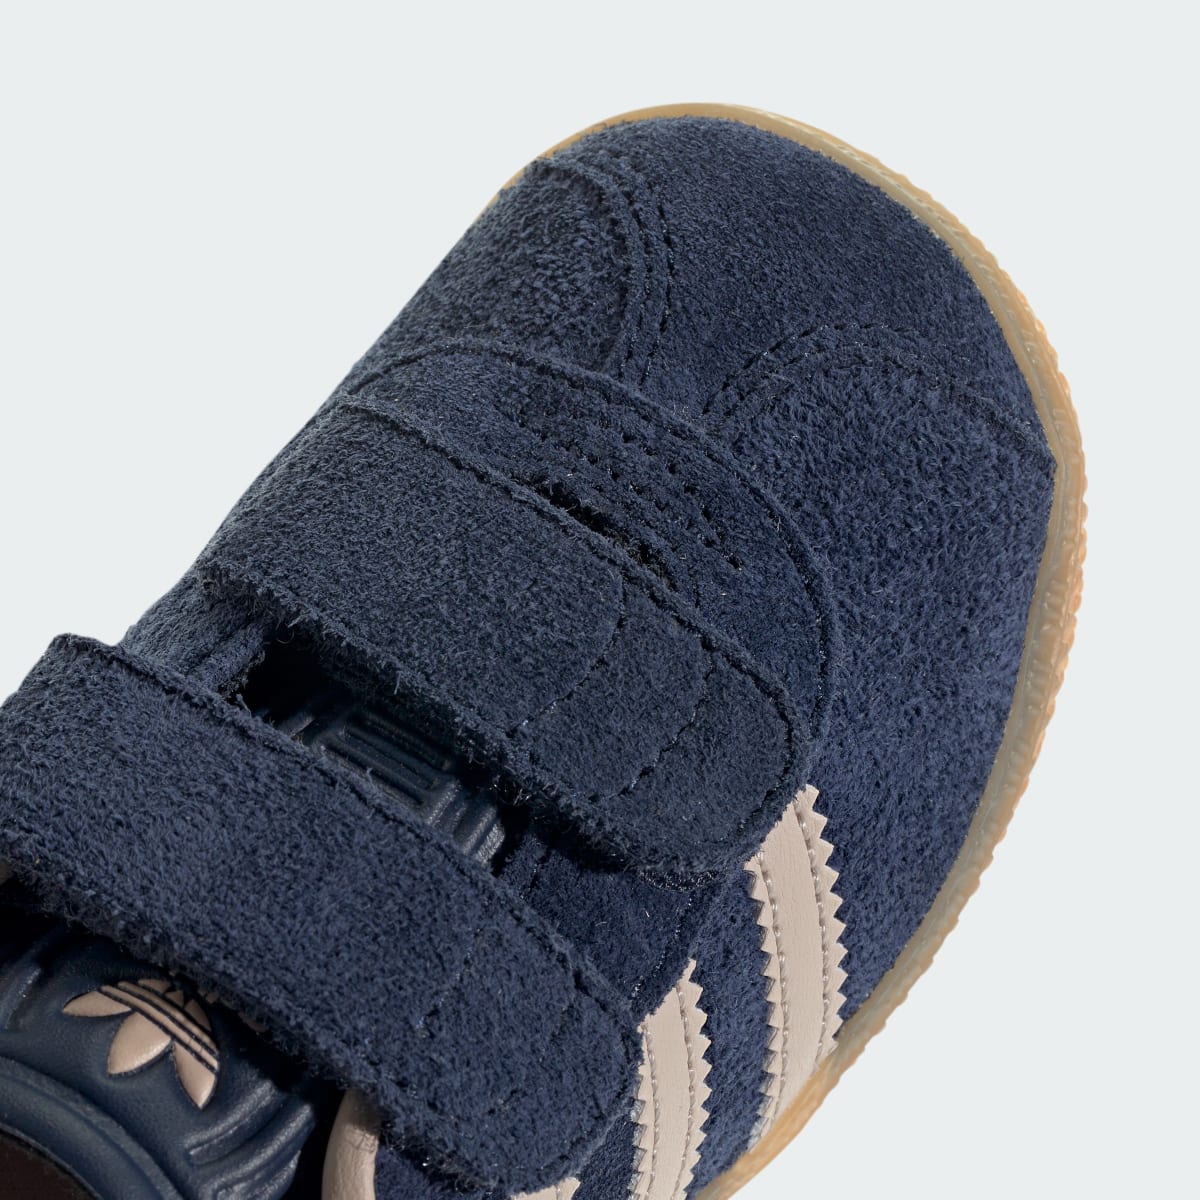 Adidas Gazelle Comfort Closure Shoes Kids. 9